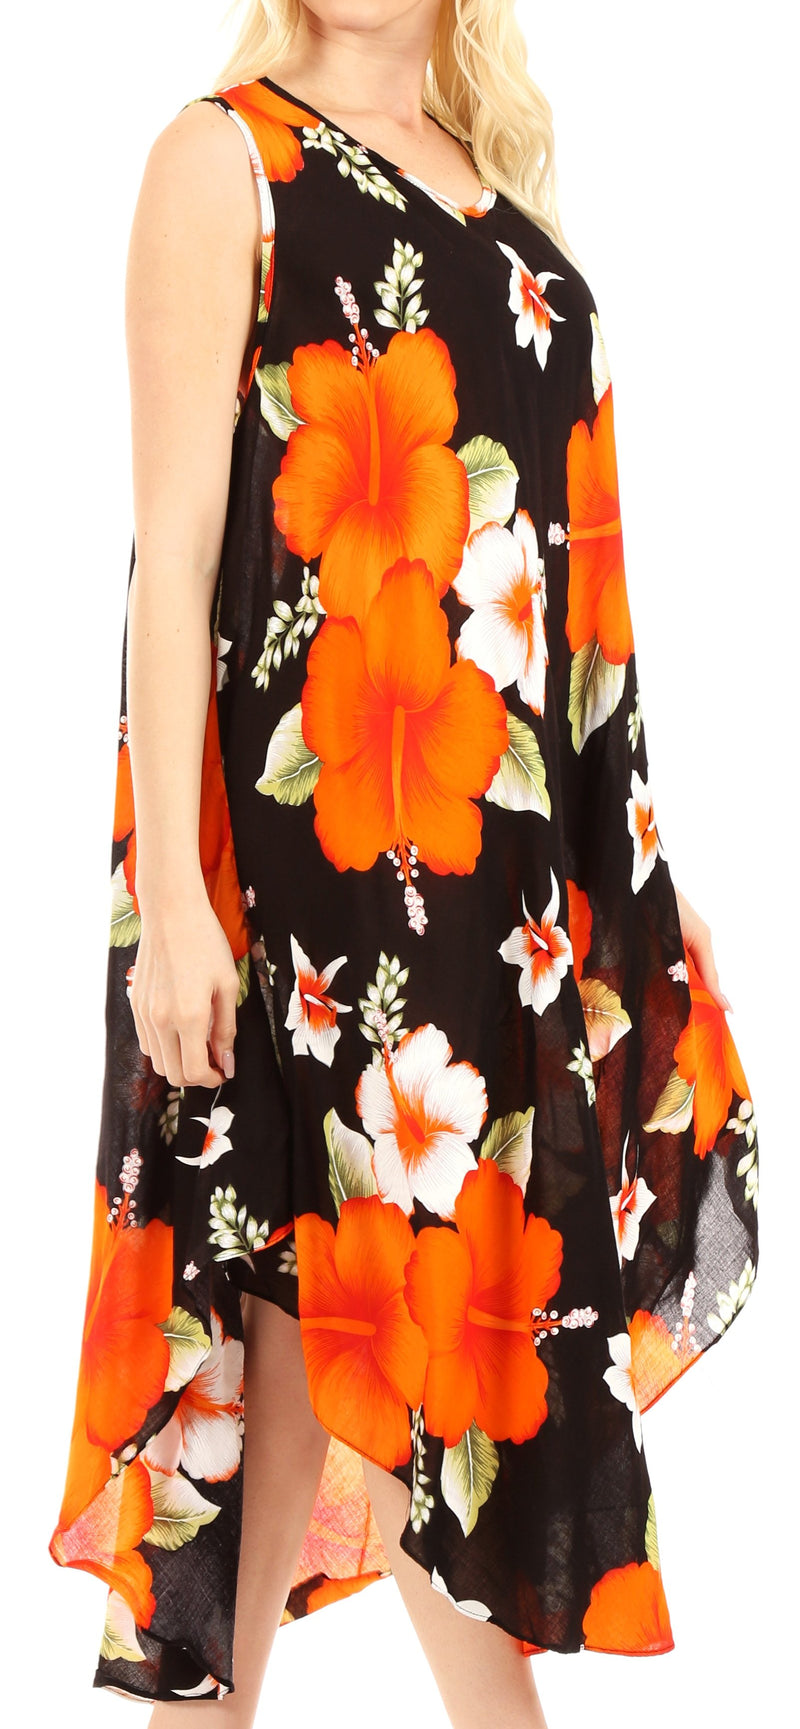 Sakkas Aba Women's Casual Summer Floral Print Sleeveless Loose Dress Cover-up